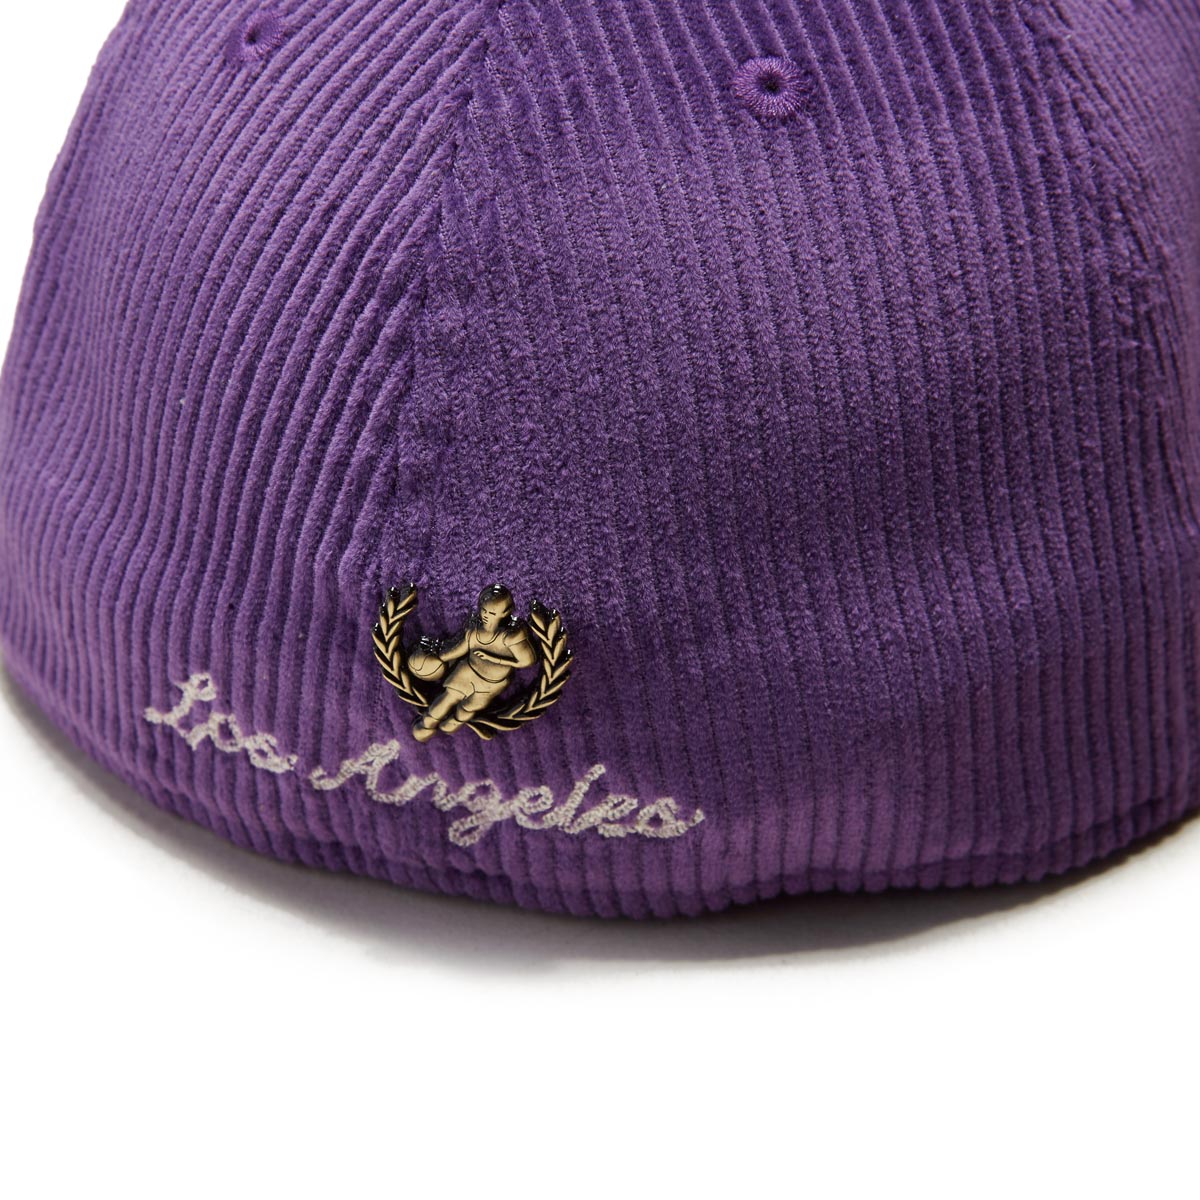 New Era 5950 Letterman Pin Hat - Los Angeles Lakers image 3